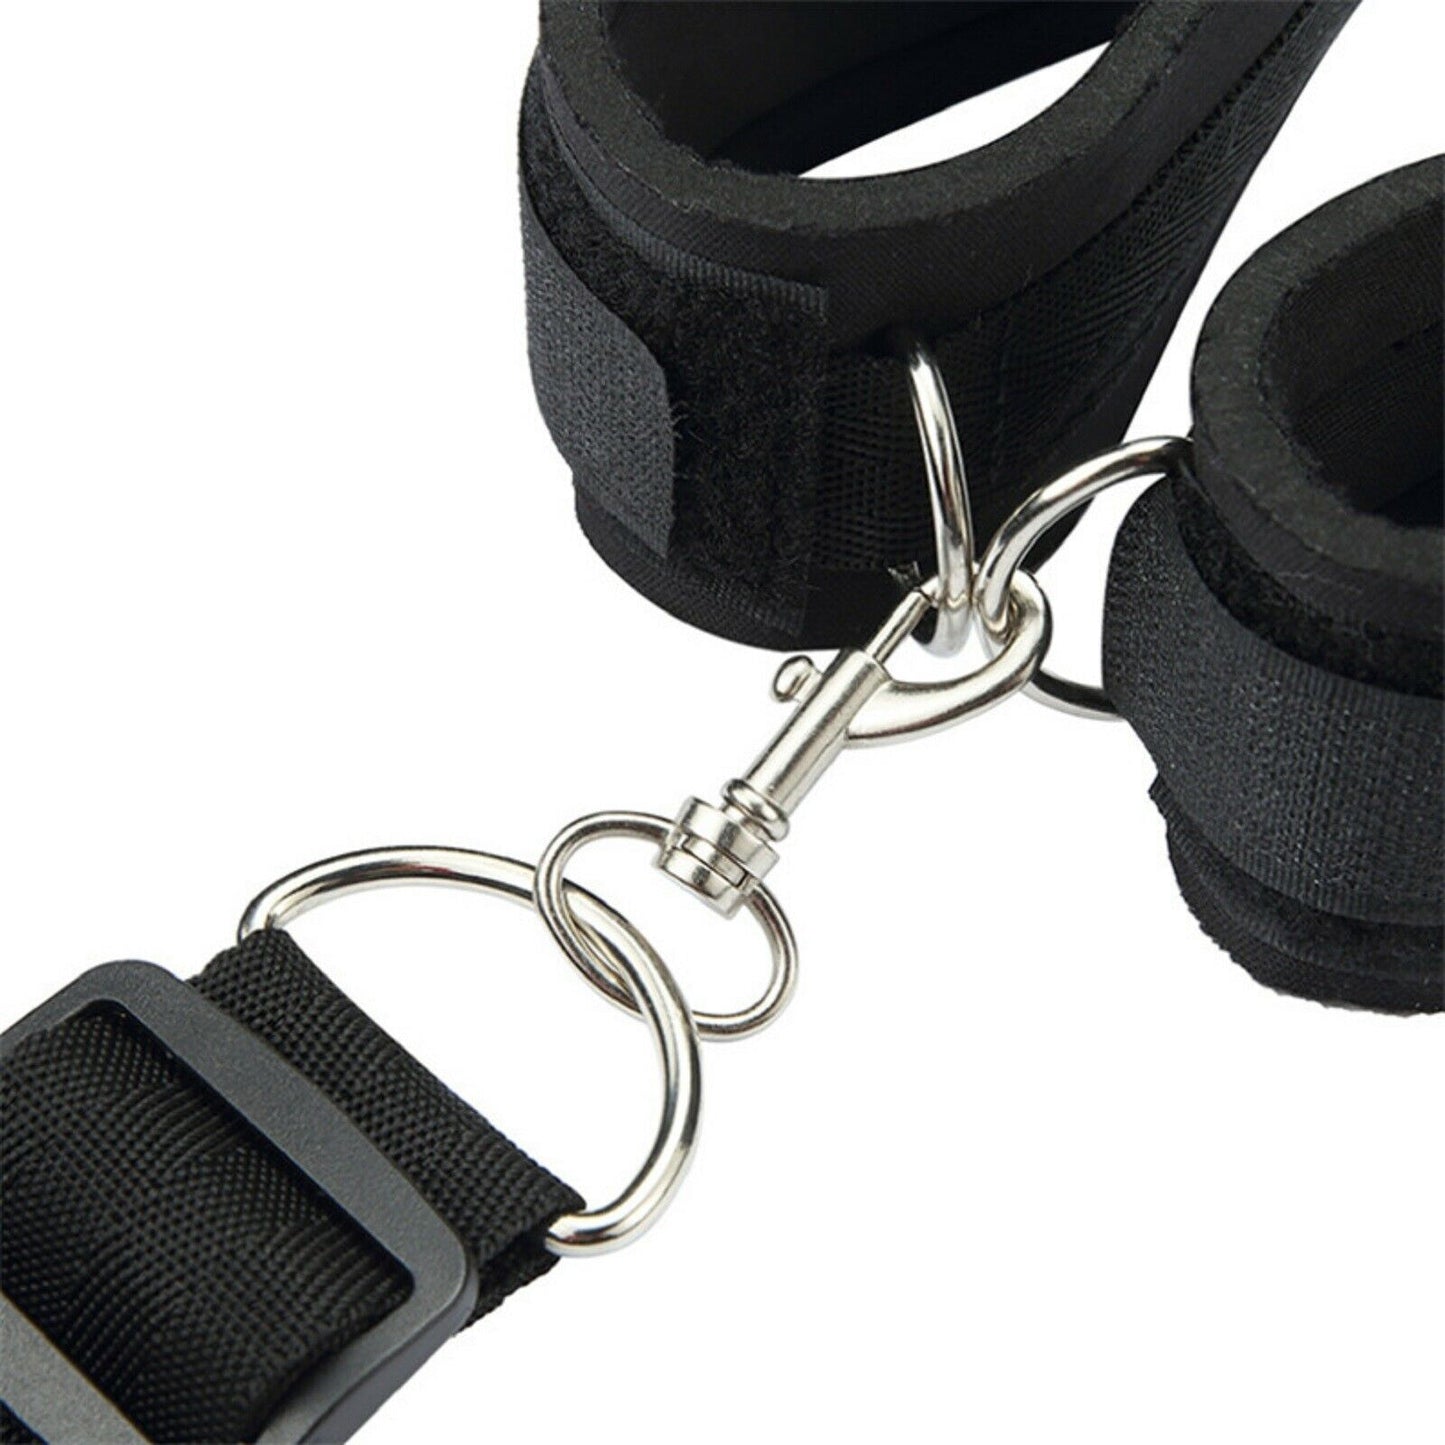 BDSM Mouth Gag Ball Bondage Restraint Kit Wrist Collar Handcuff Couples Sex Toy